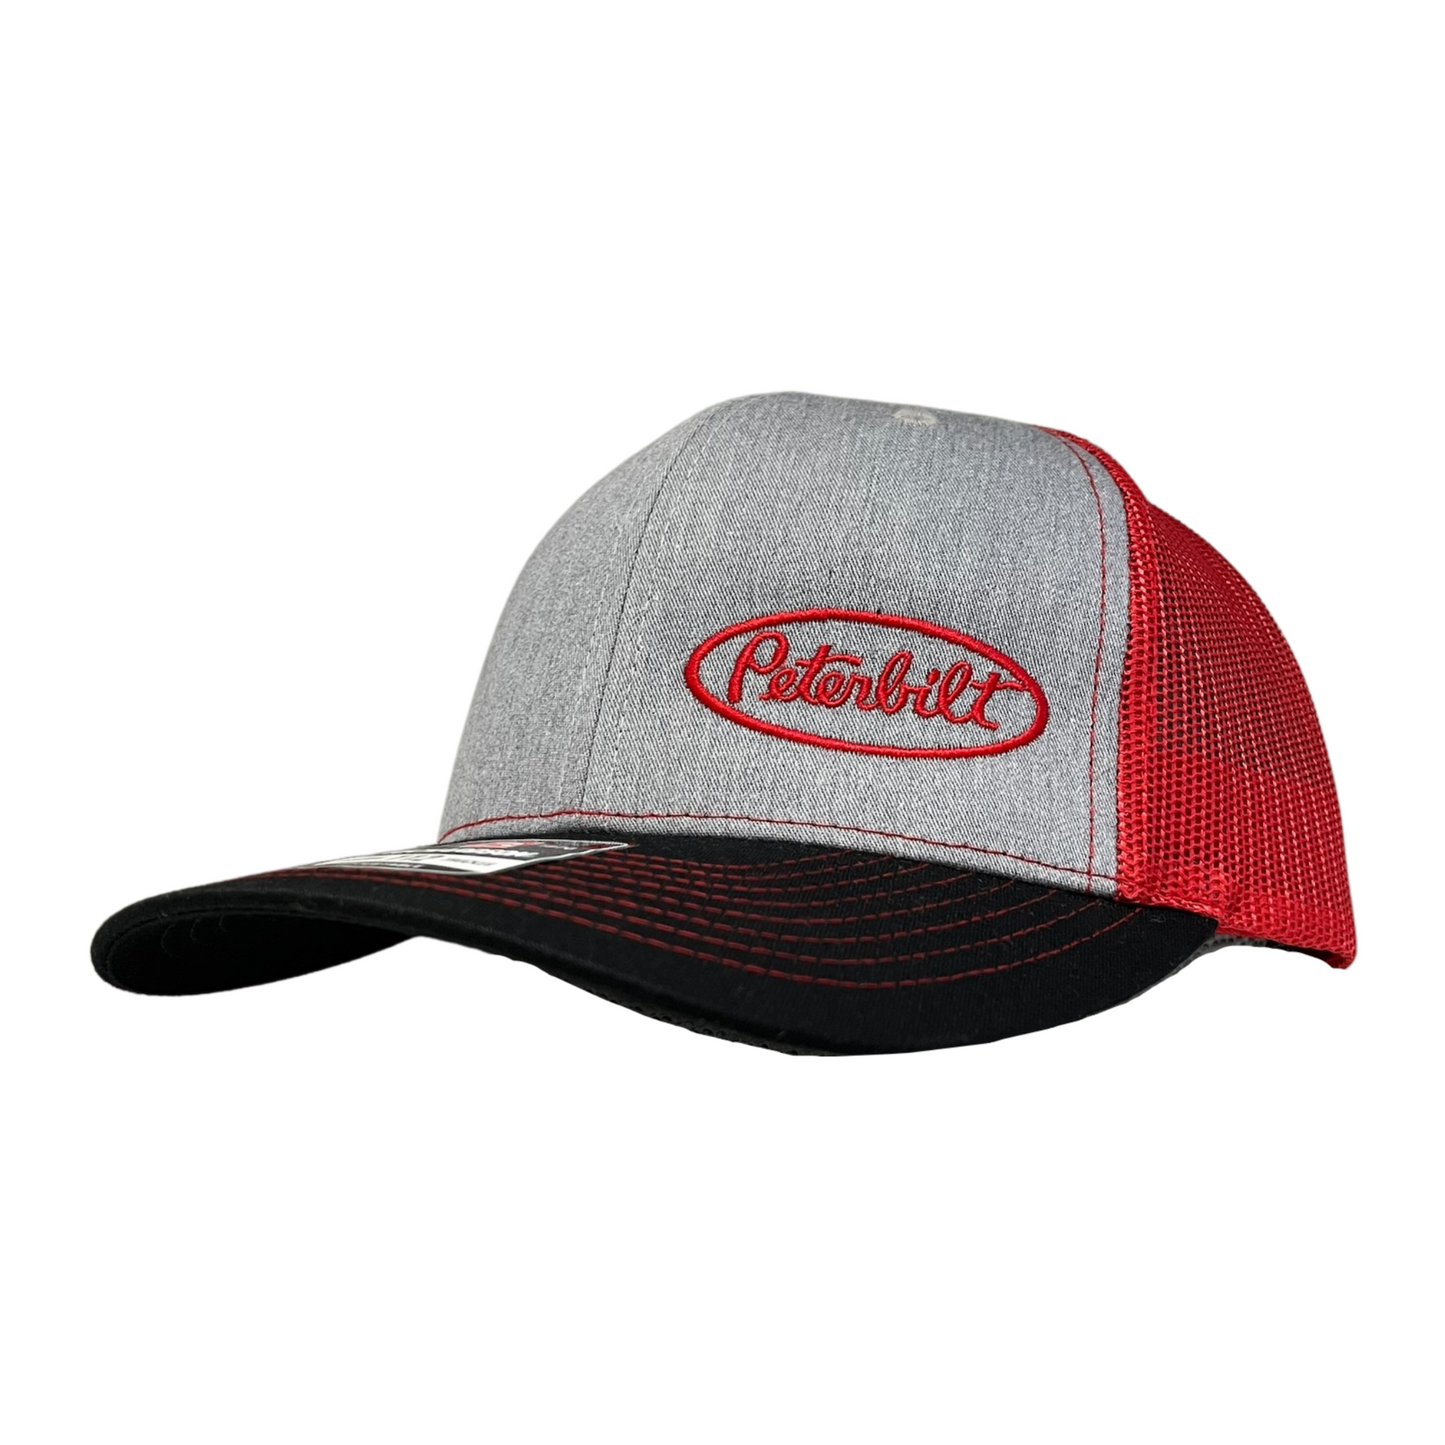 Classic Black, Gray, and Red Peterbilt Logo Trucker Cap